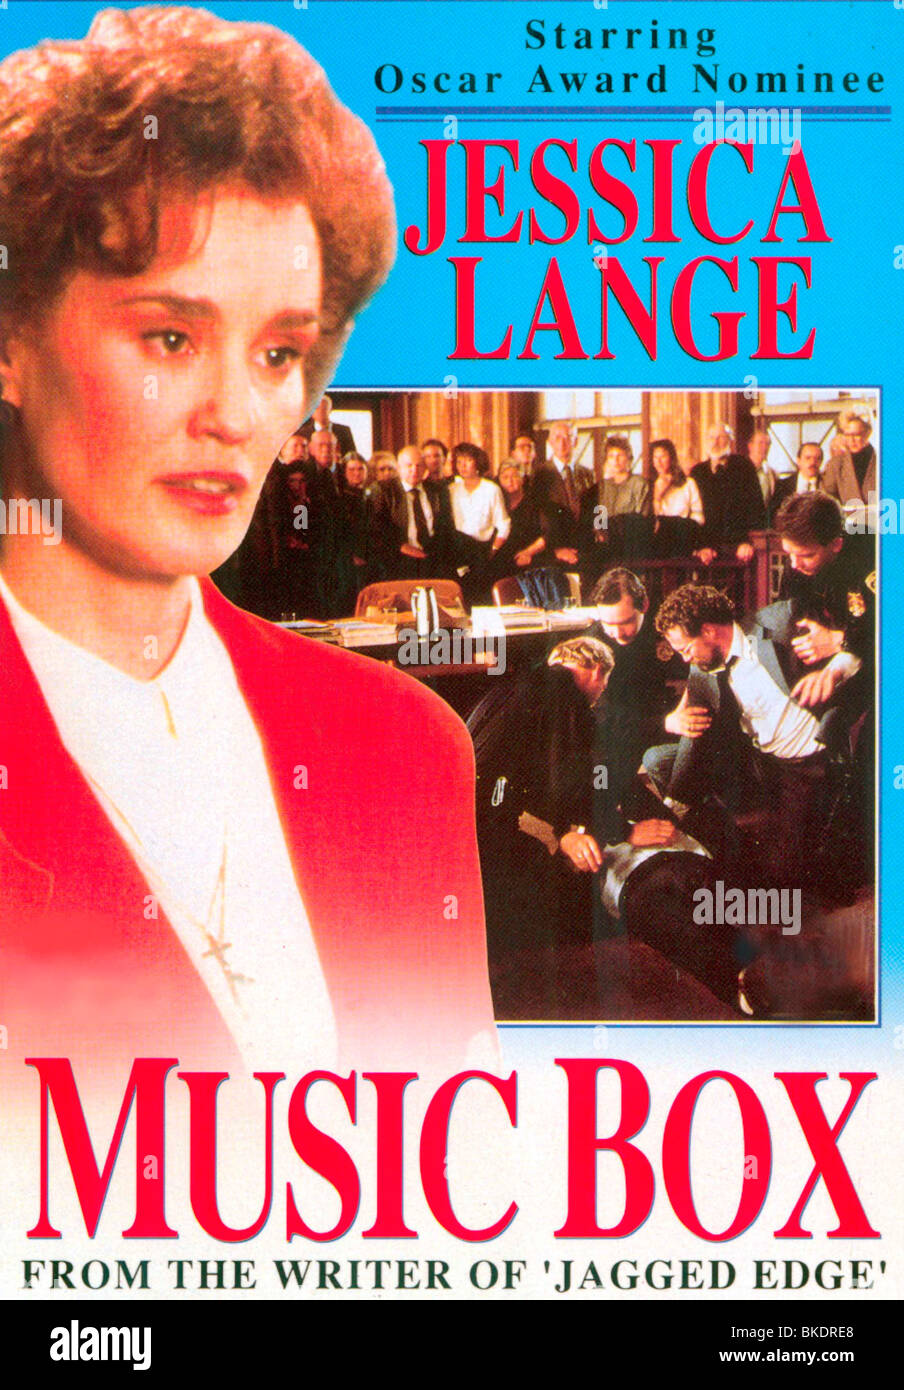 MUSIC BOX -1989 POSTER Stock Photo